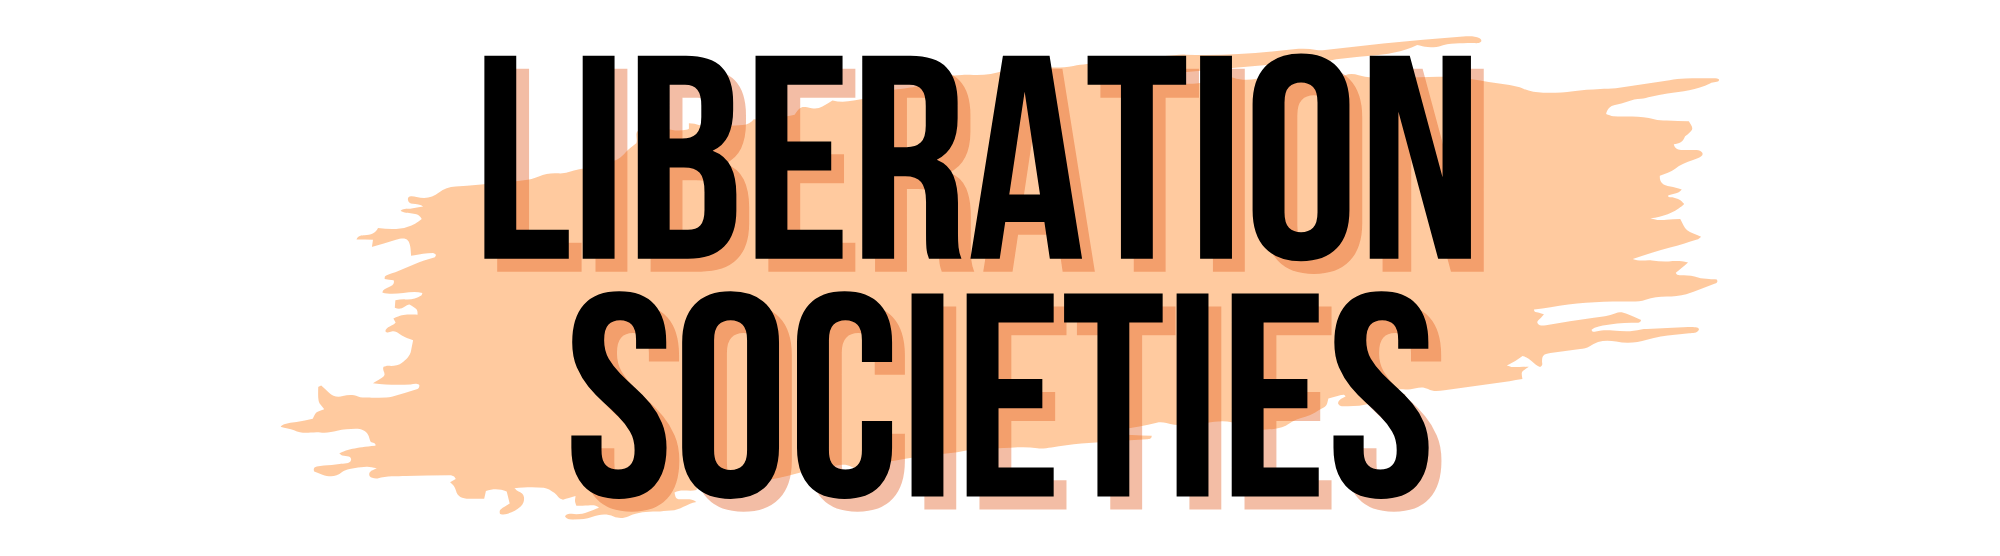 Liberation societies